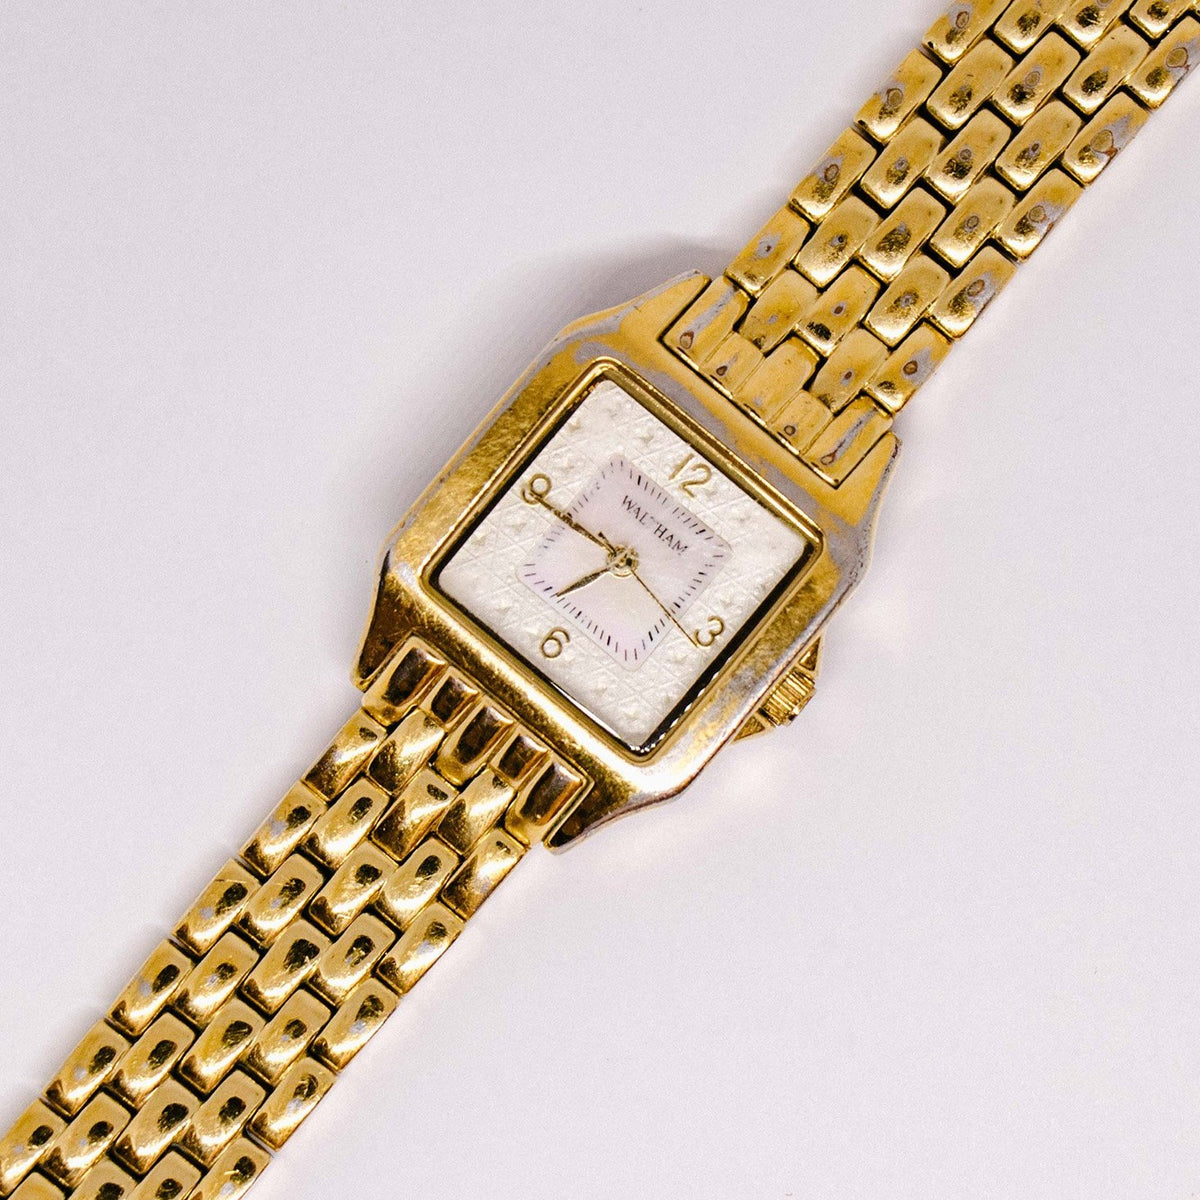 Vintage Square-Shaped Waltham Watch | Unisex Waltham Quartz Watch ...